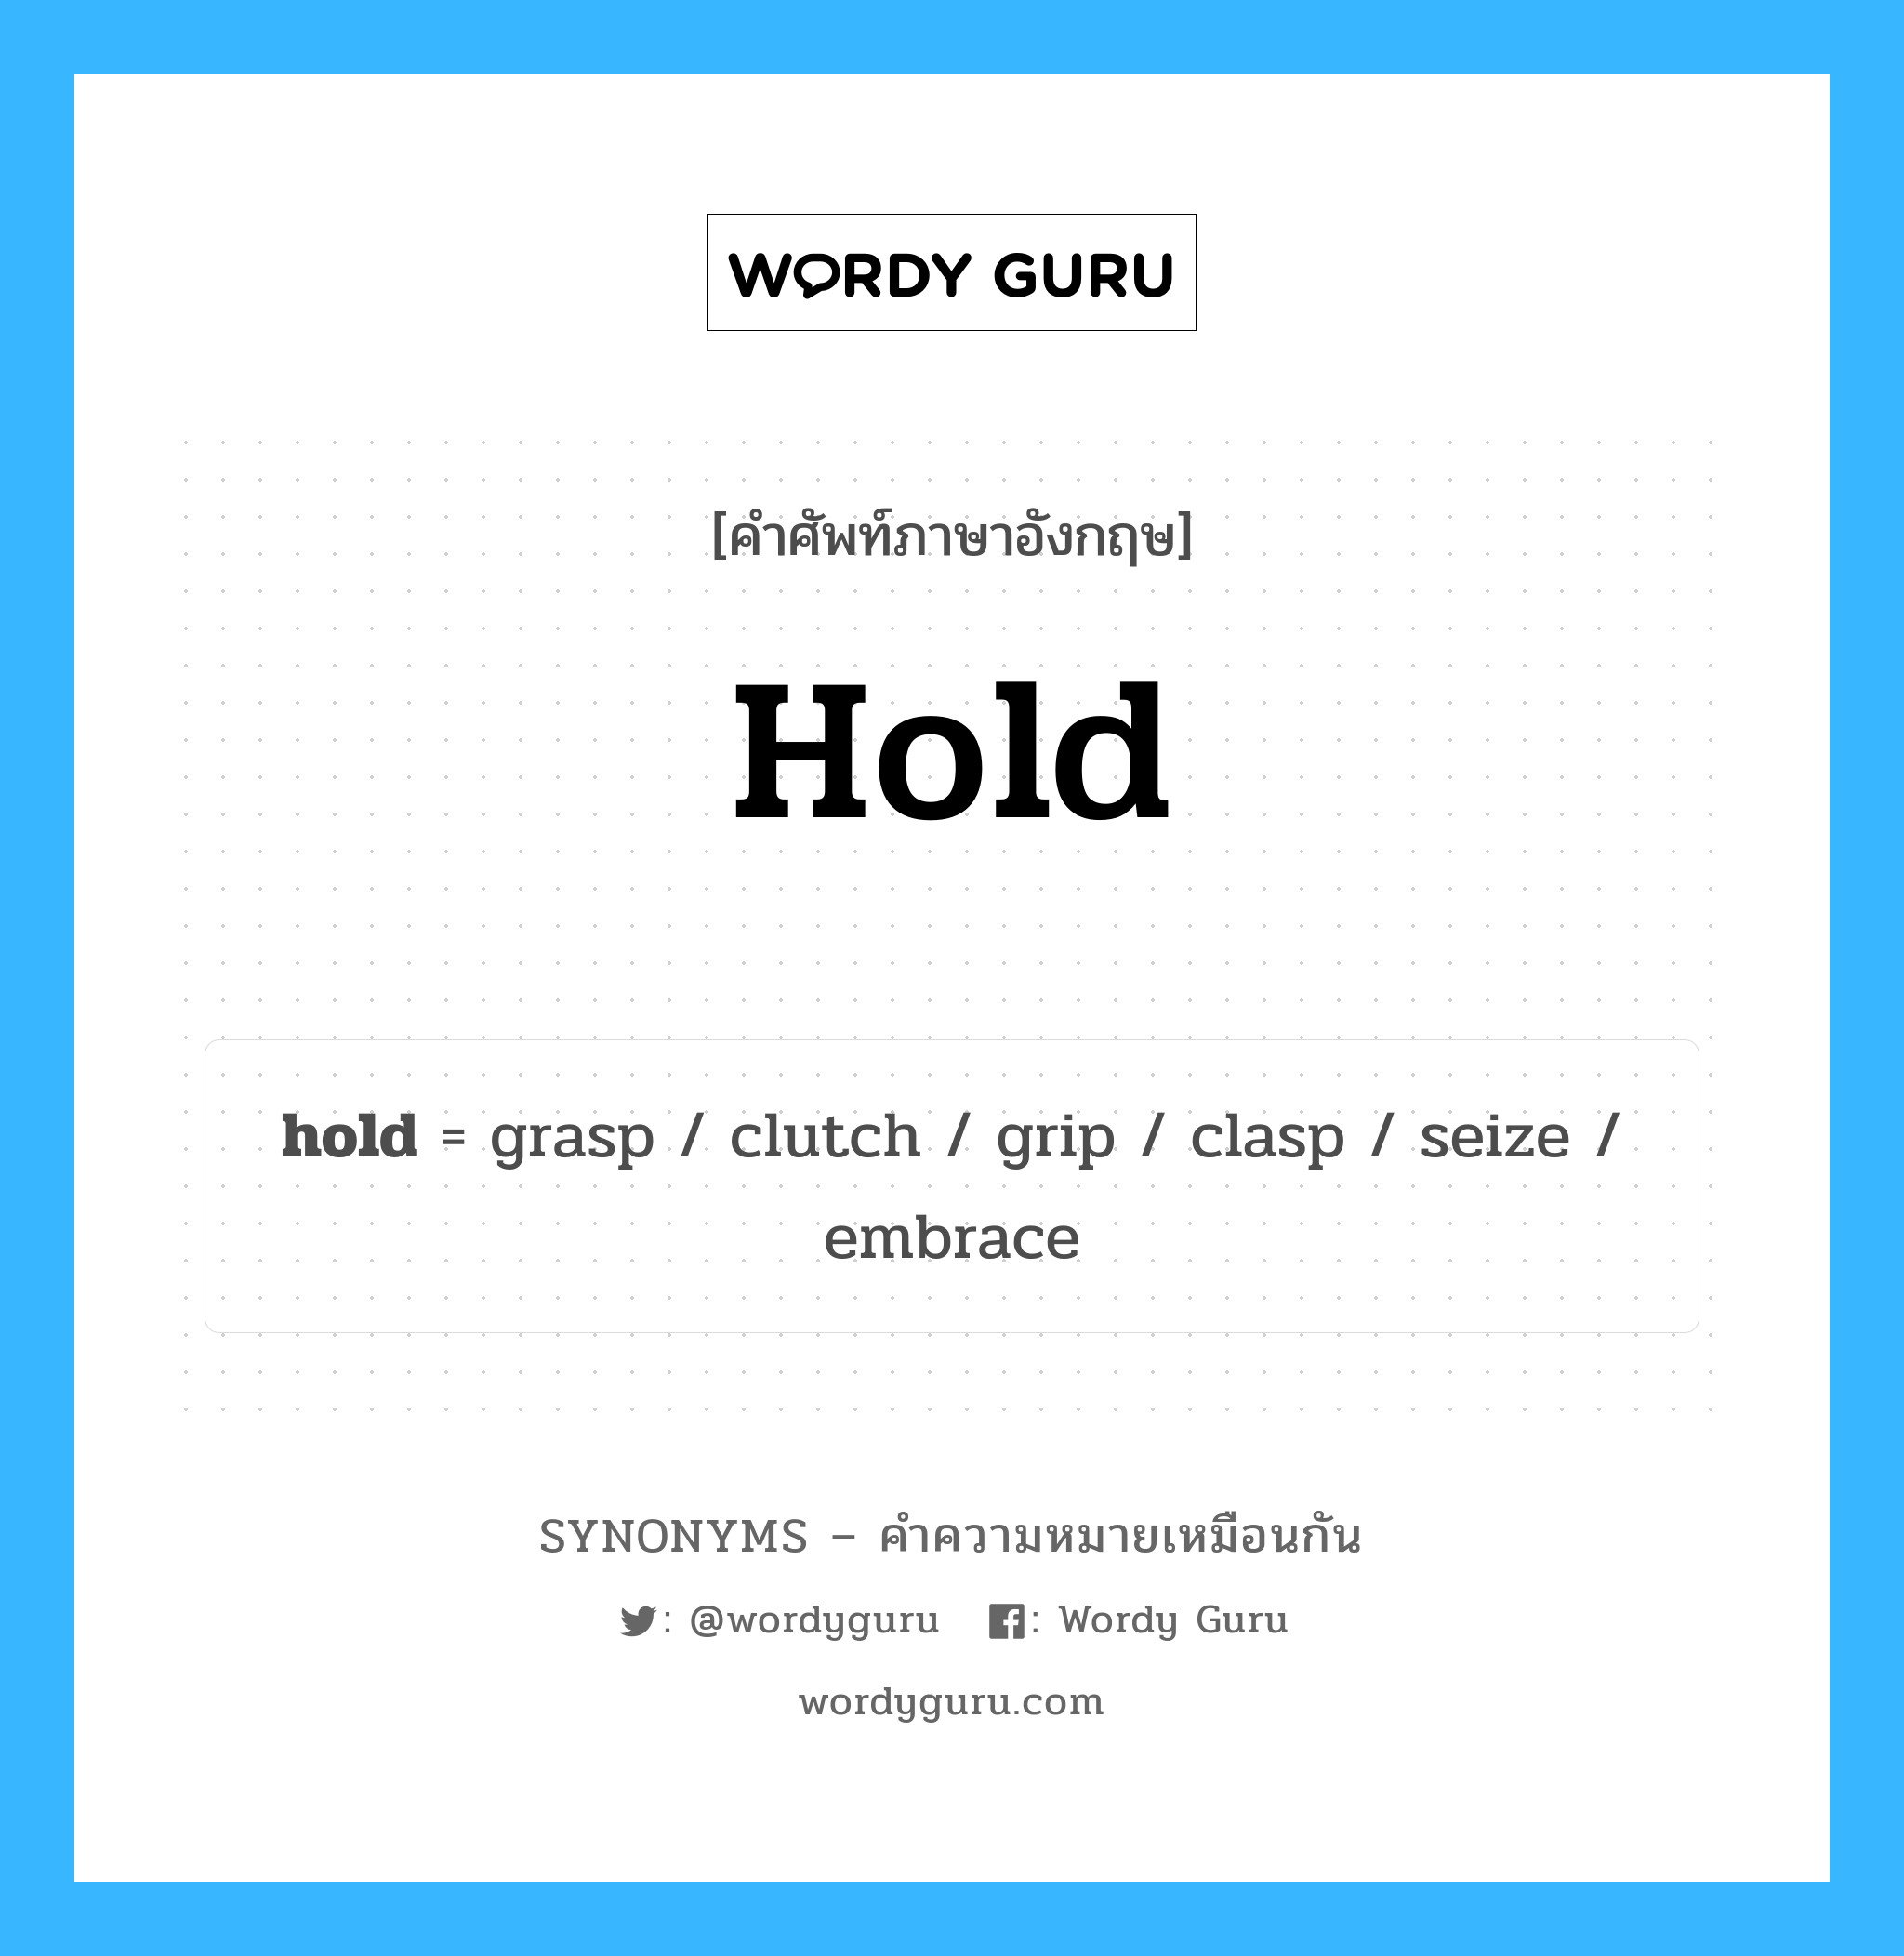 clutch เป็นหนึ่งใน hold และมีคำอื่น ๆ อีกดังนี้, คำศัพท์ภาษาอังกฤษ clutch ความหมายคล้ายกันกับ hold แปลว่า คลัทซ์ หมวด hold